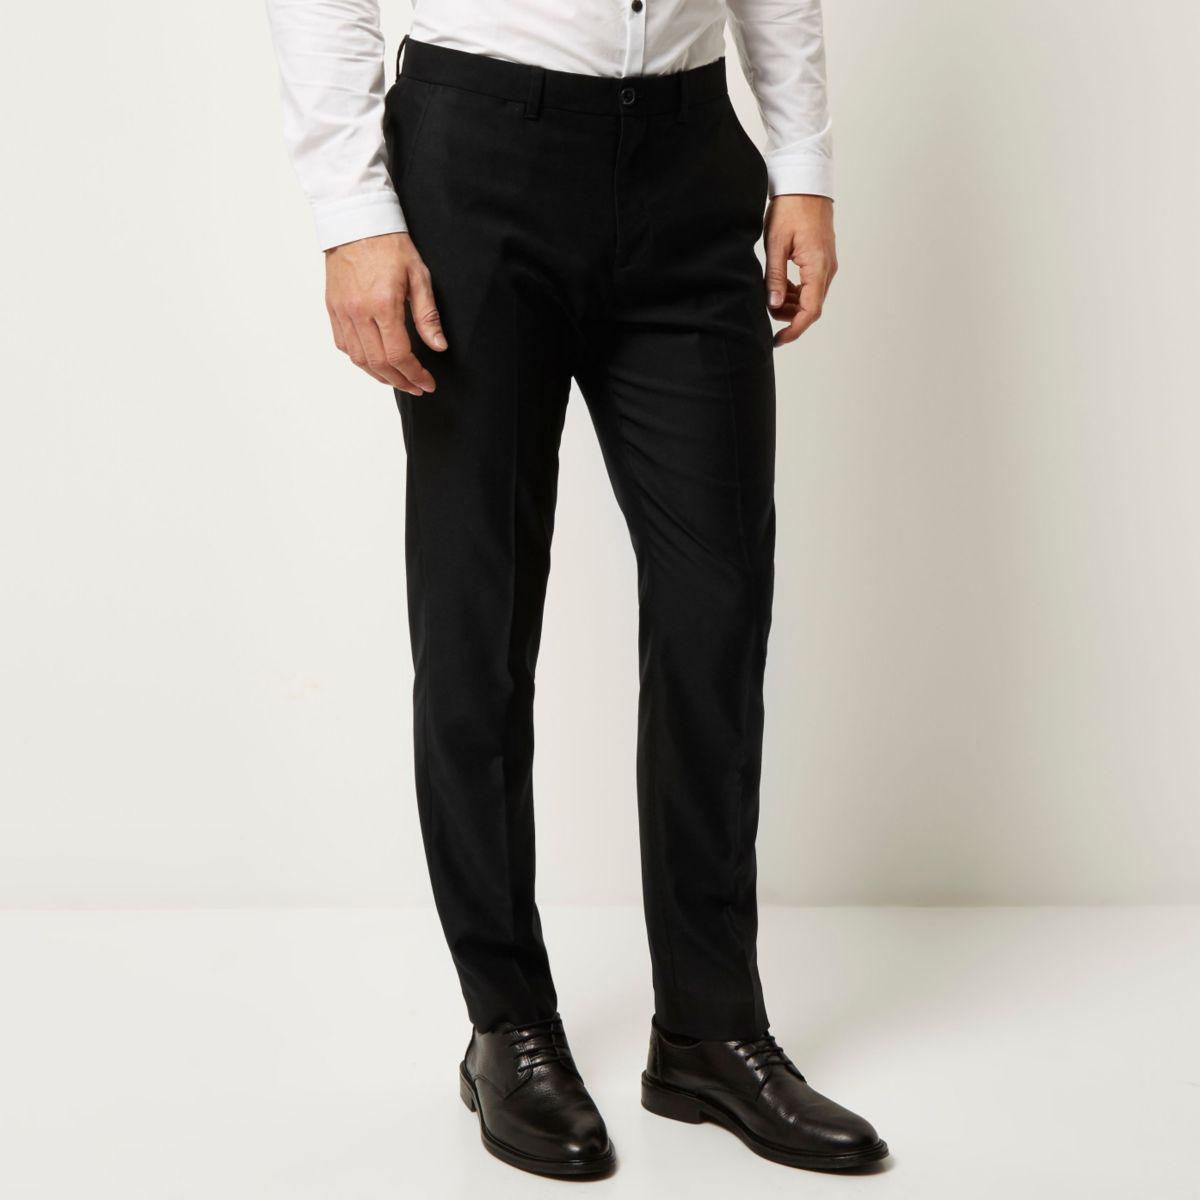 Black slim fit smart trousers - Trousers - Sale - men